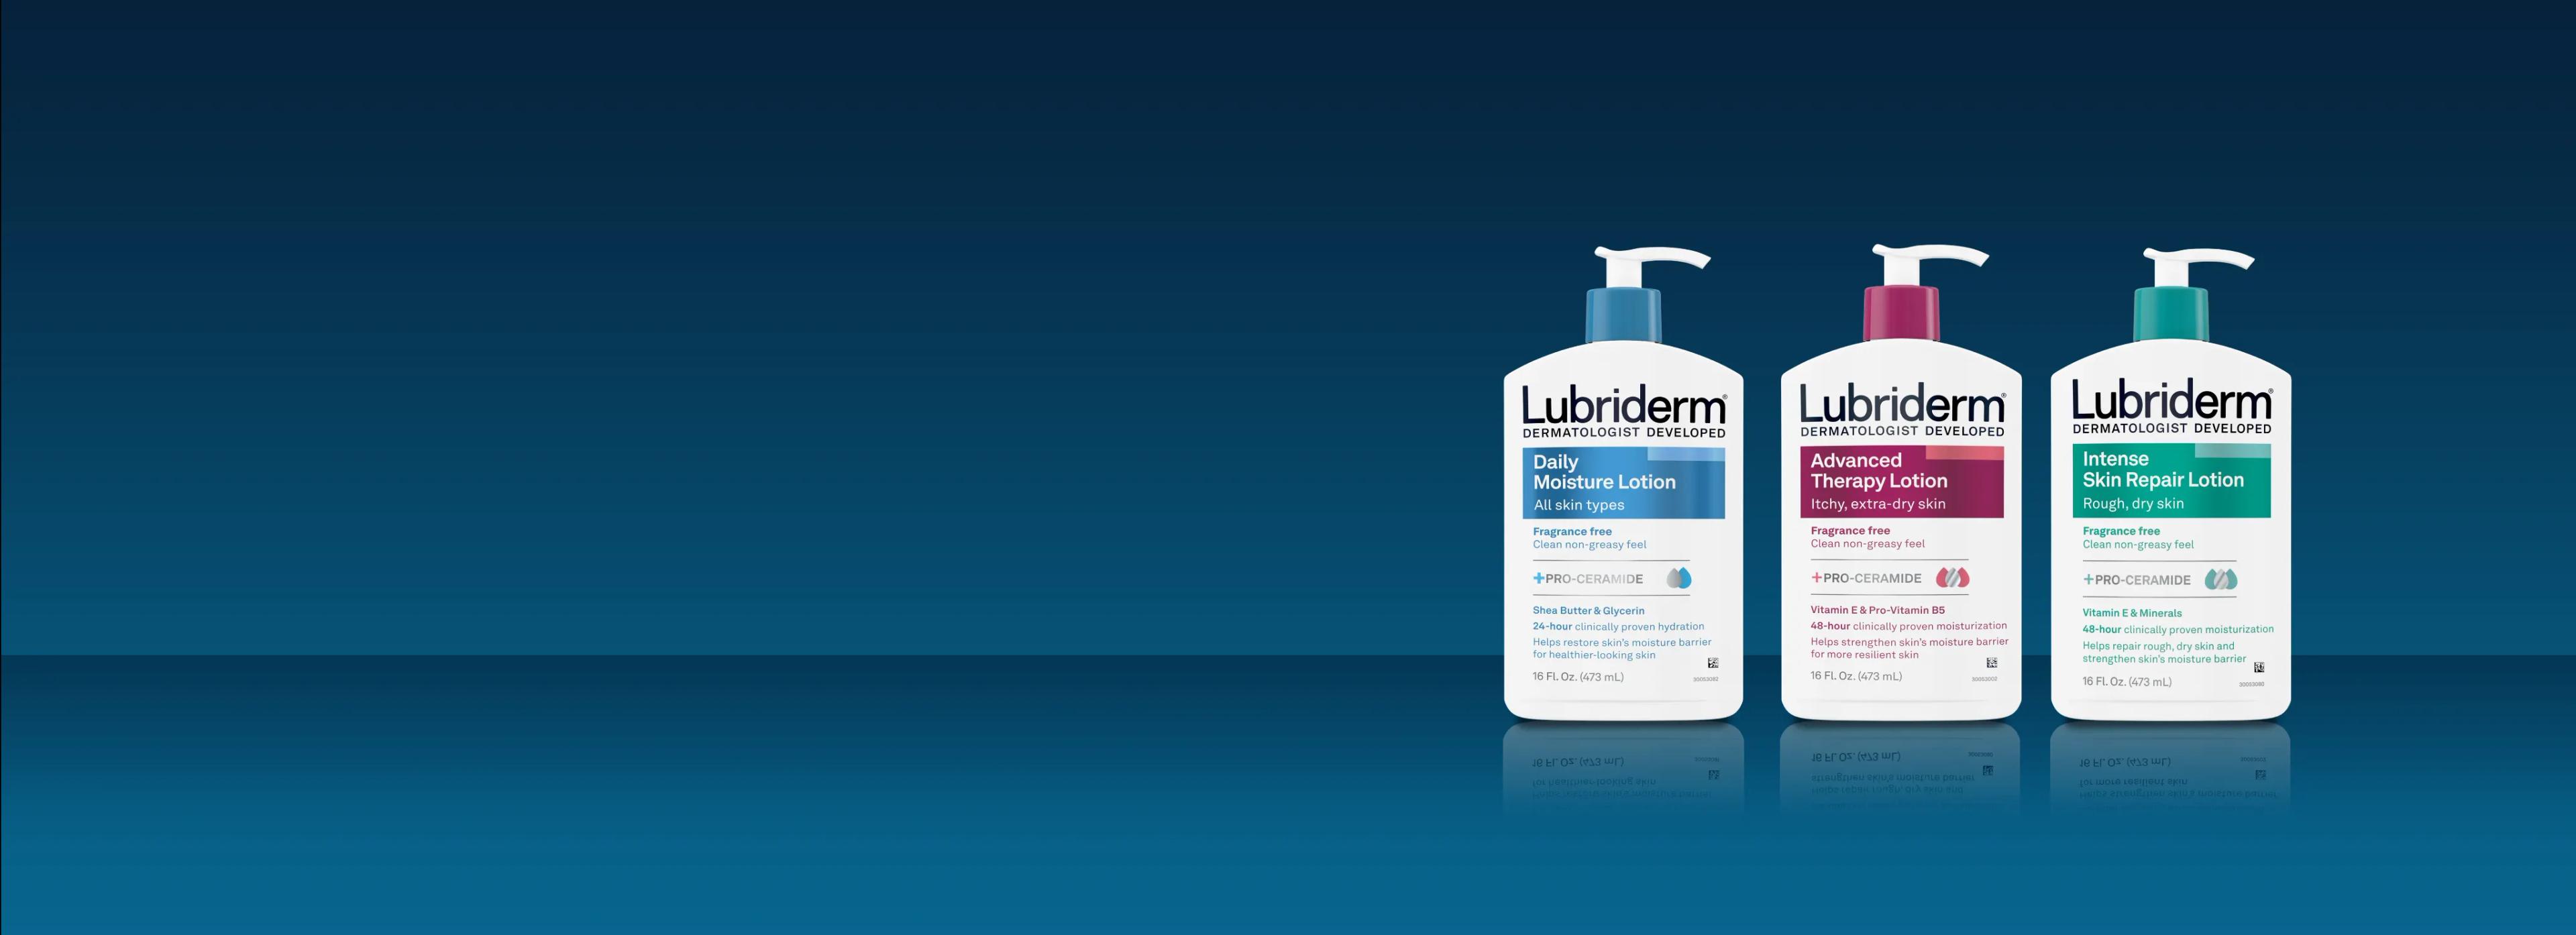 Three lubriderm products